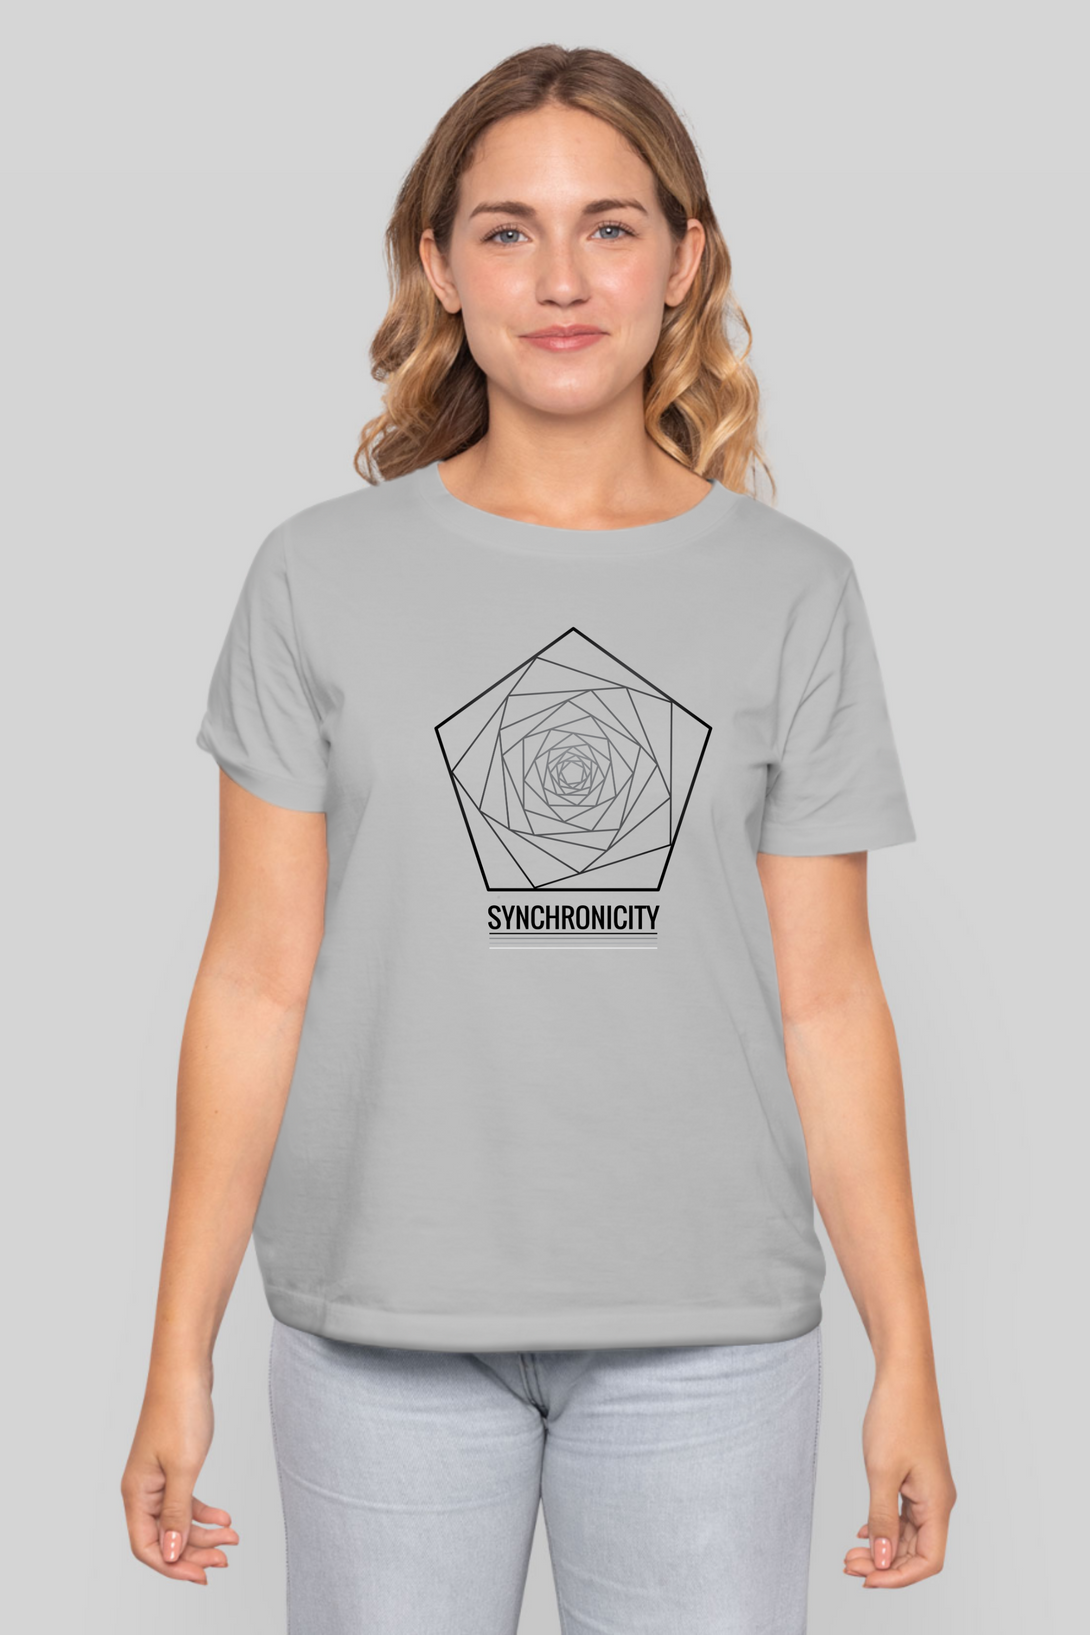 Sacred Geometry Printed T-Shirt For Women - WowWaves - 8